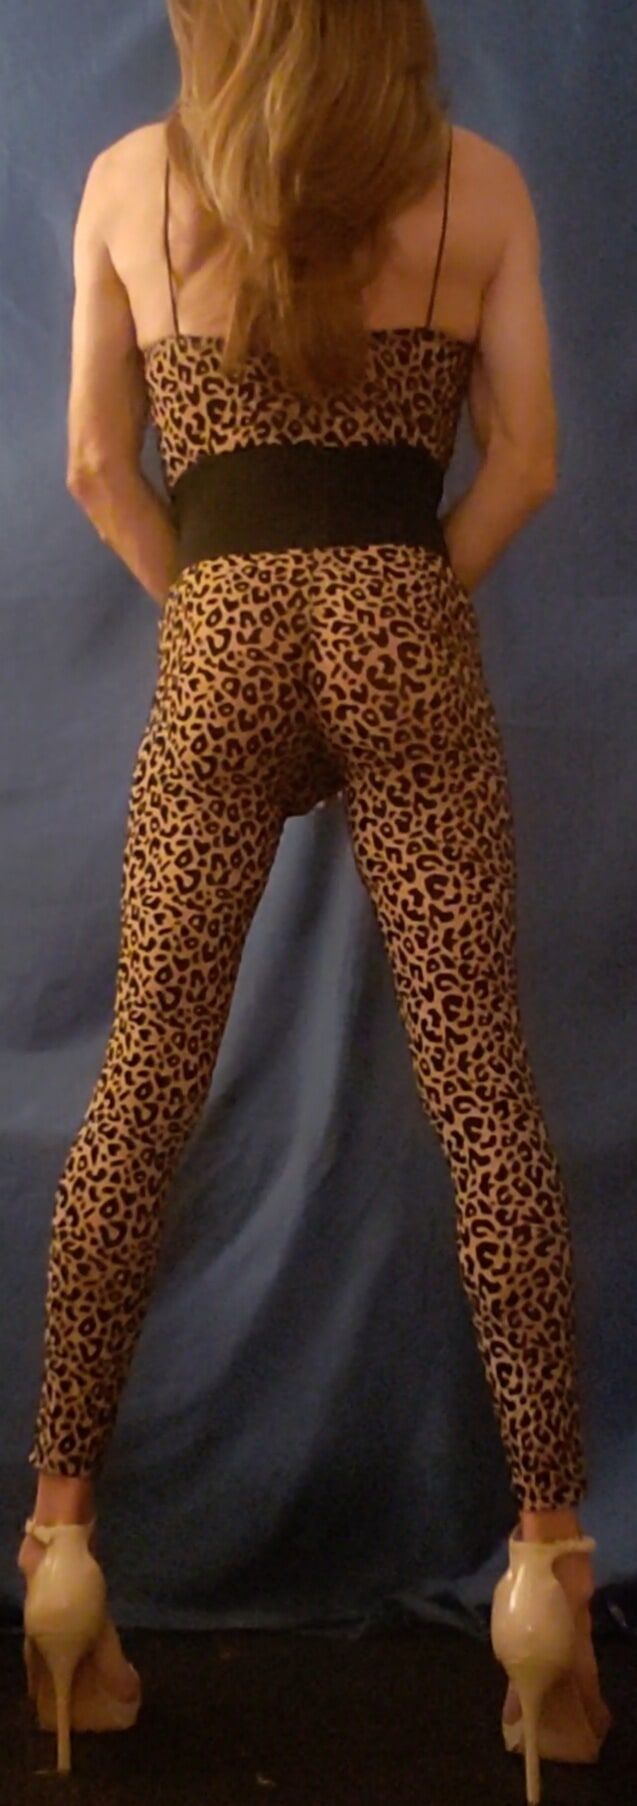 Leopard print bodysuit  #6